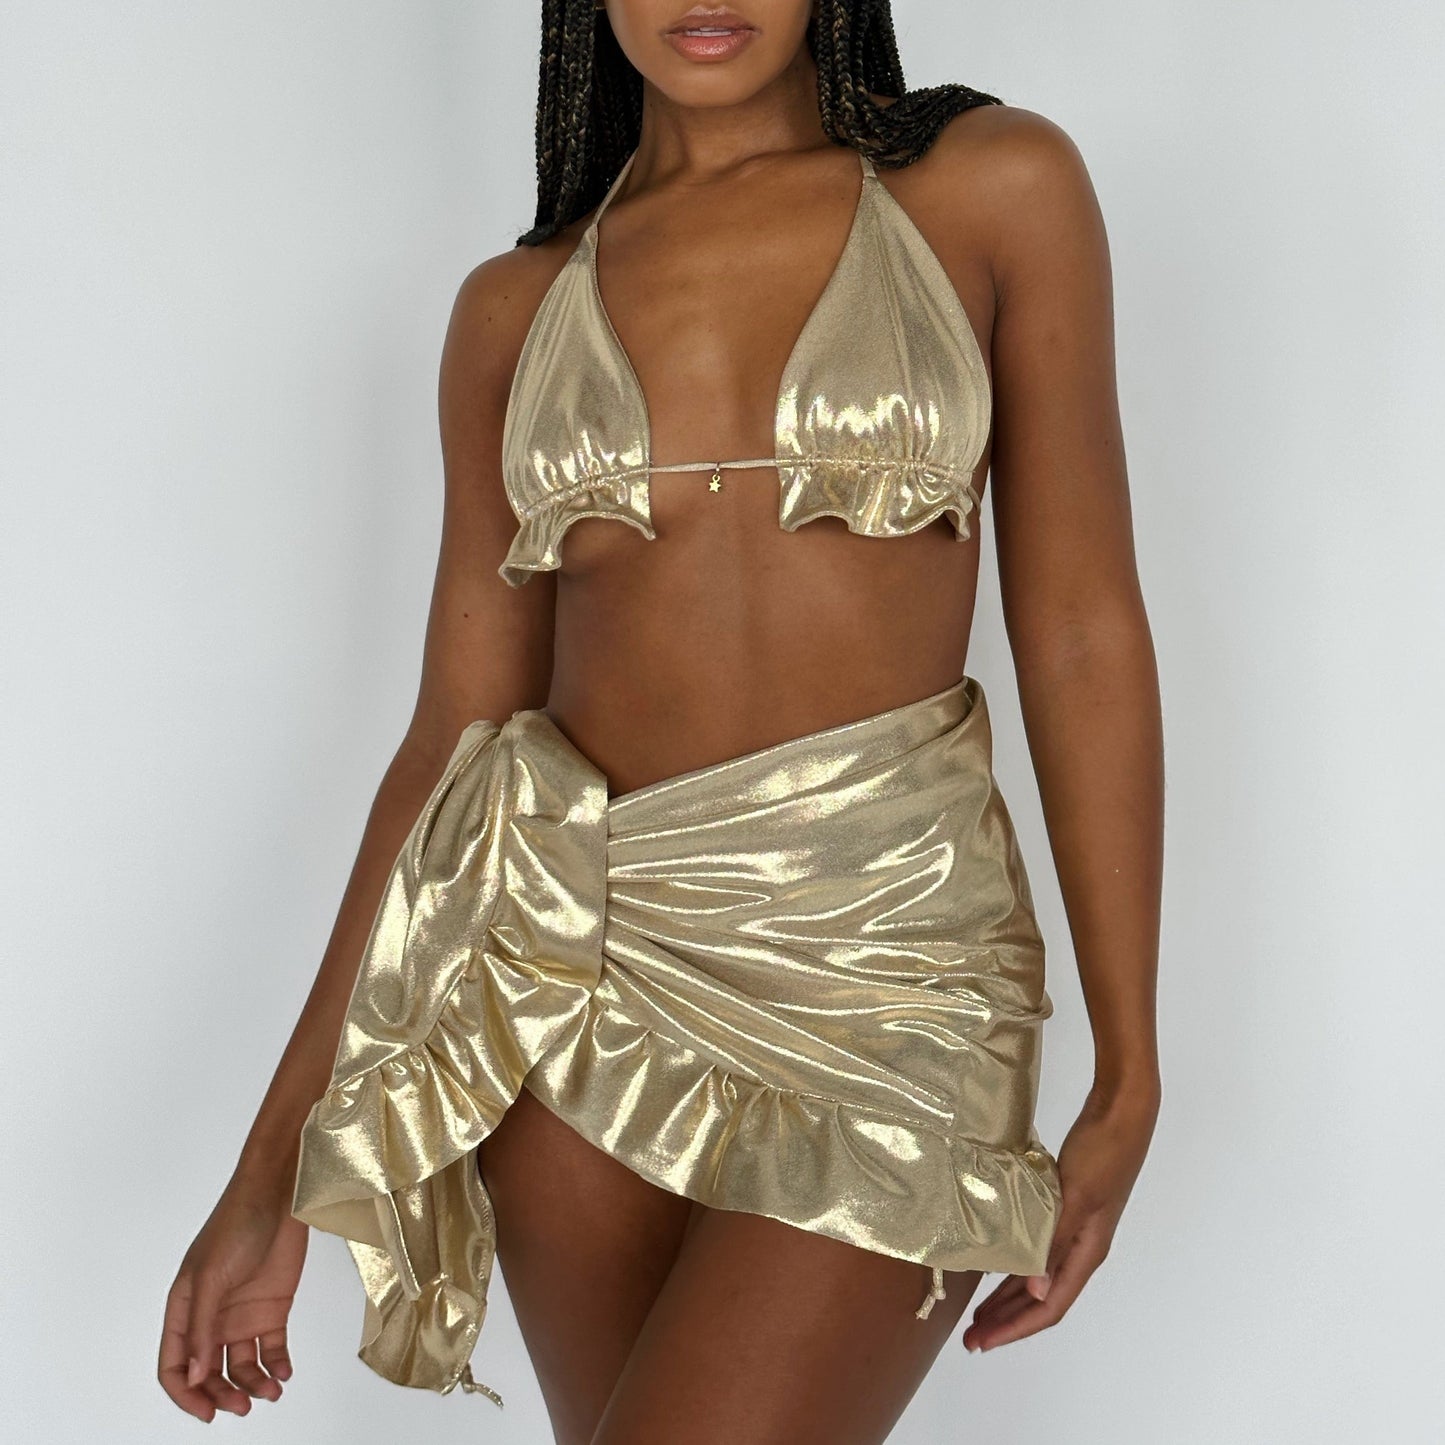 (Premade) Metallic Gold Star Charm Bikini Set - Size 8